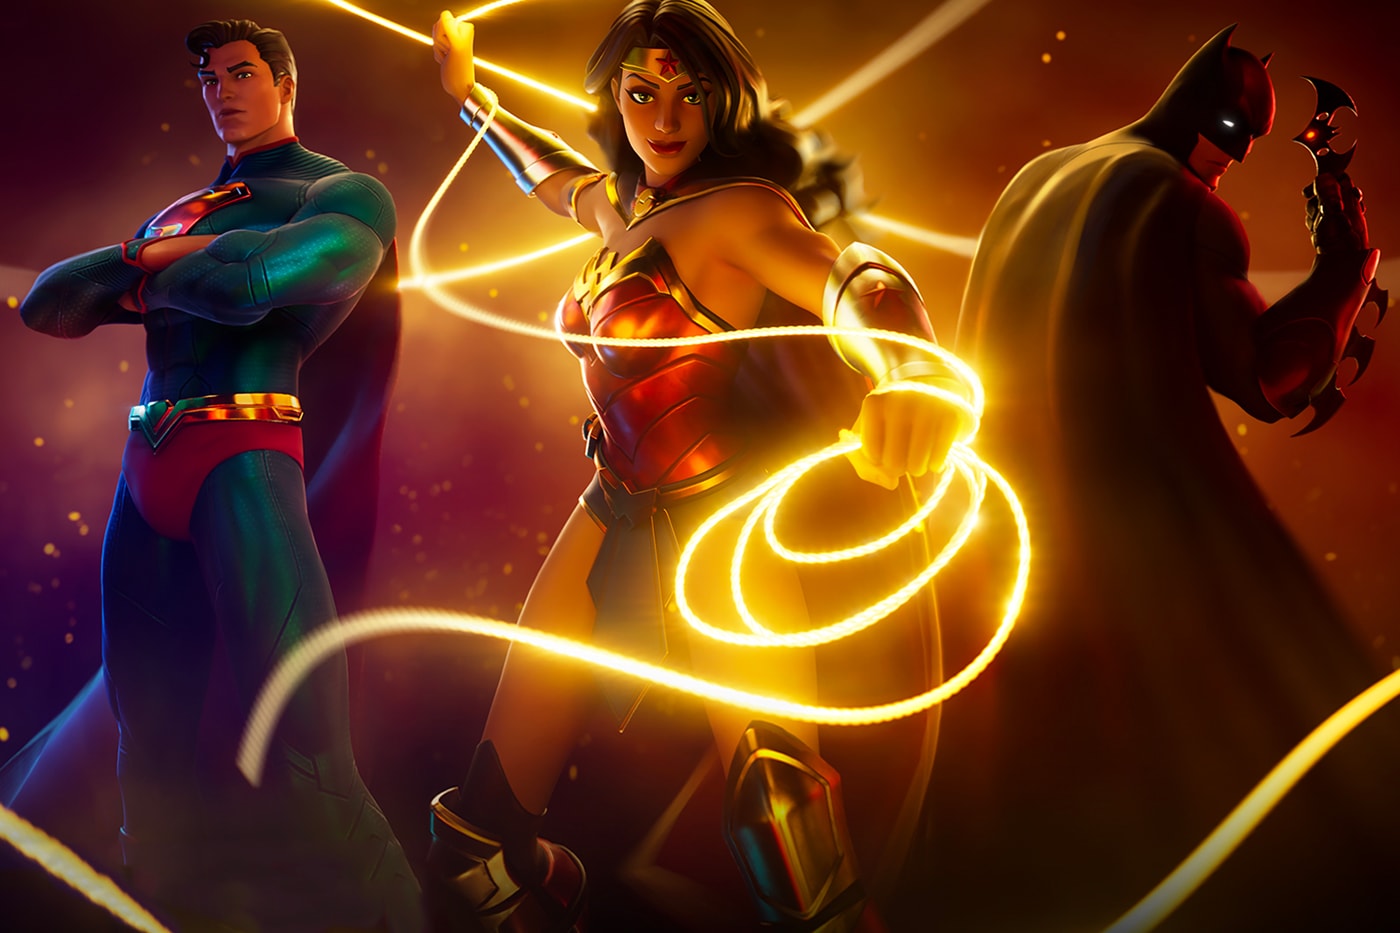 epic games Fortnite Wonder Woman Skin Release Info dc comics dceu gal gadot batman superman justice league